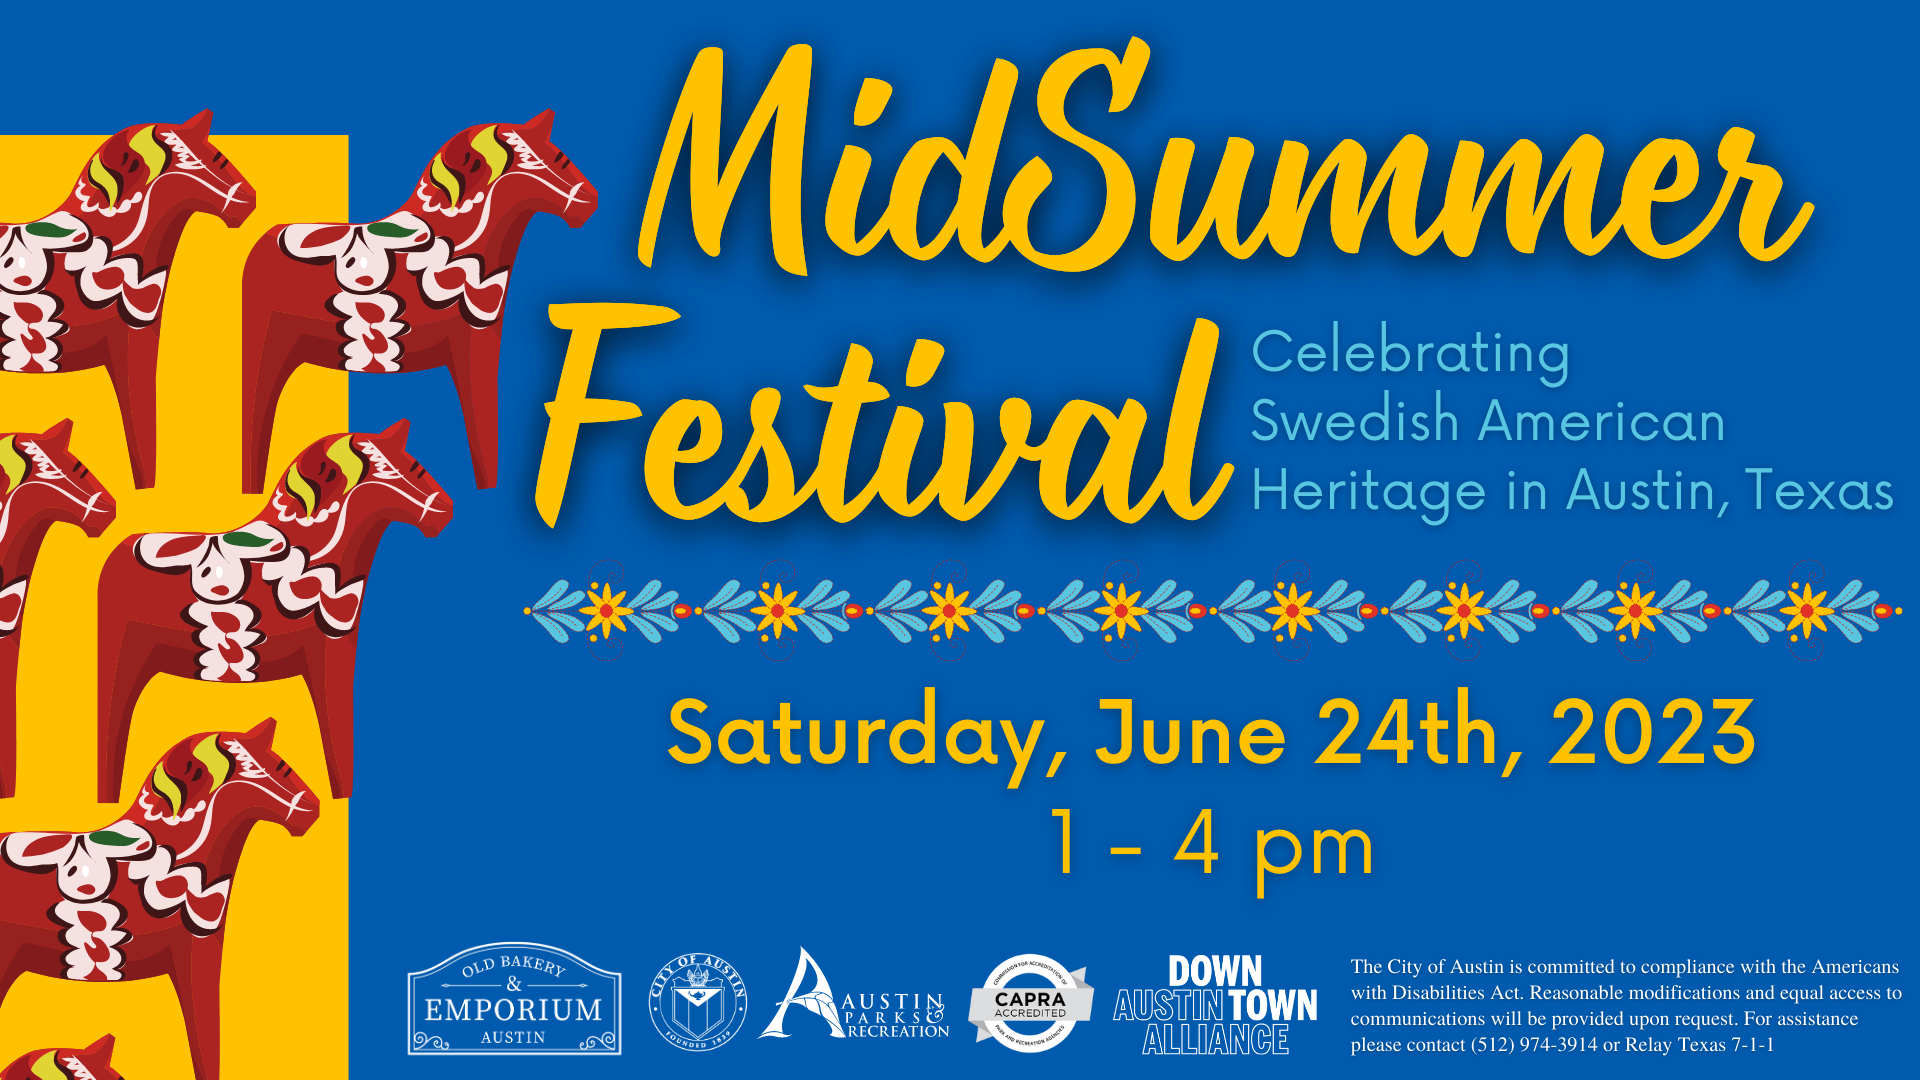 MidSummer Festival Celebrating SwedishAmerican Culture in Austin